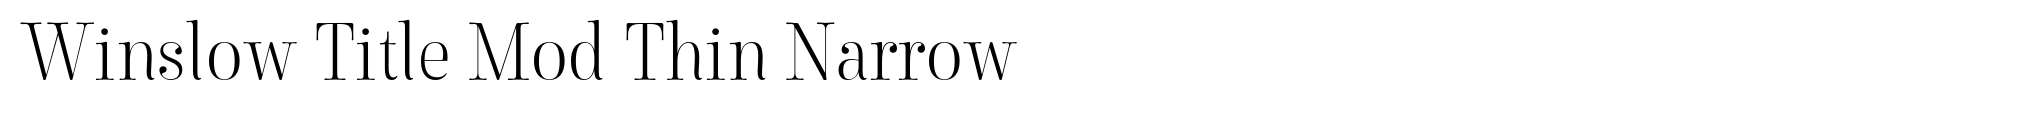 Winslow Title Mod Thin Narrow image